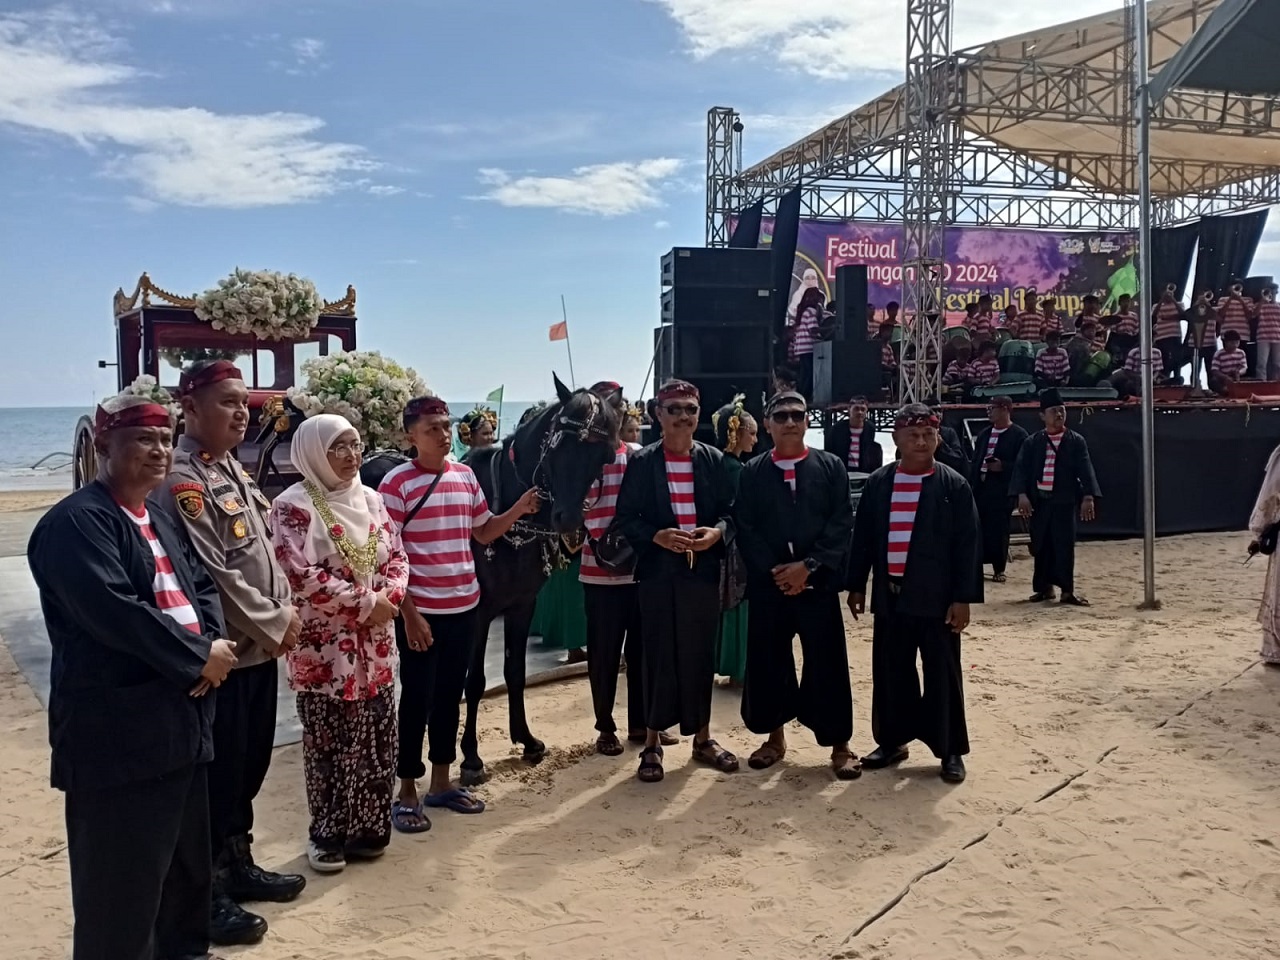 Pemkab Sumenep Gelar Festival Led Lebaran Hari Ketupat 2024 di Pantai Lombang Sumenep